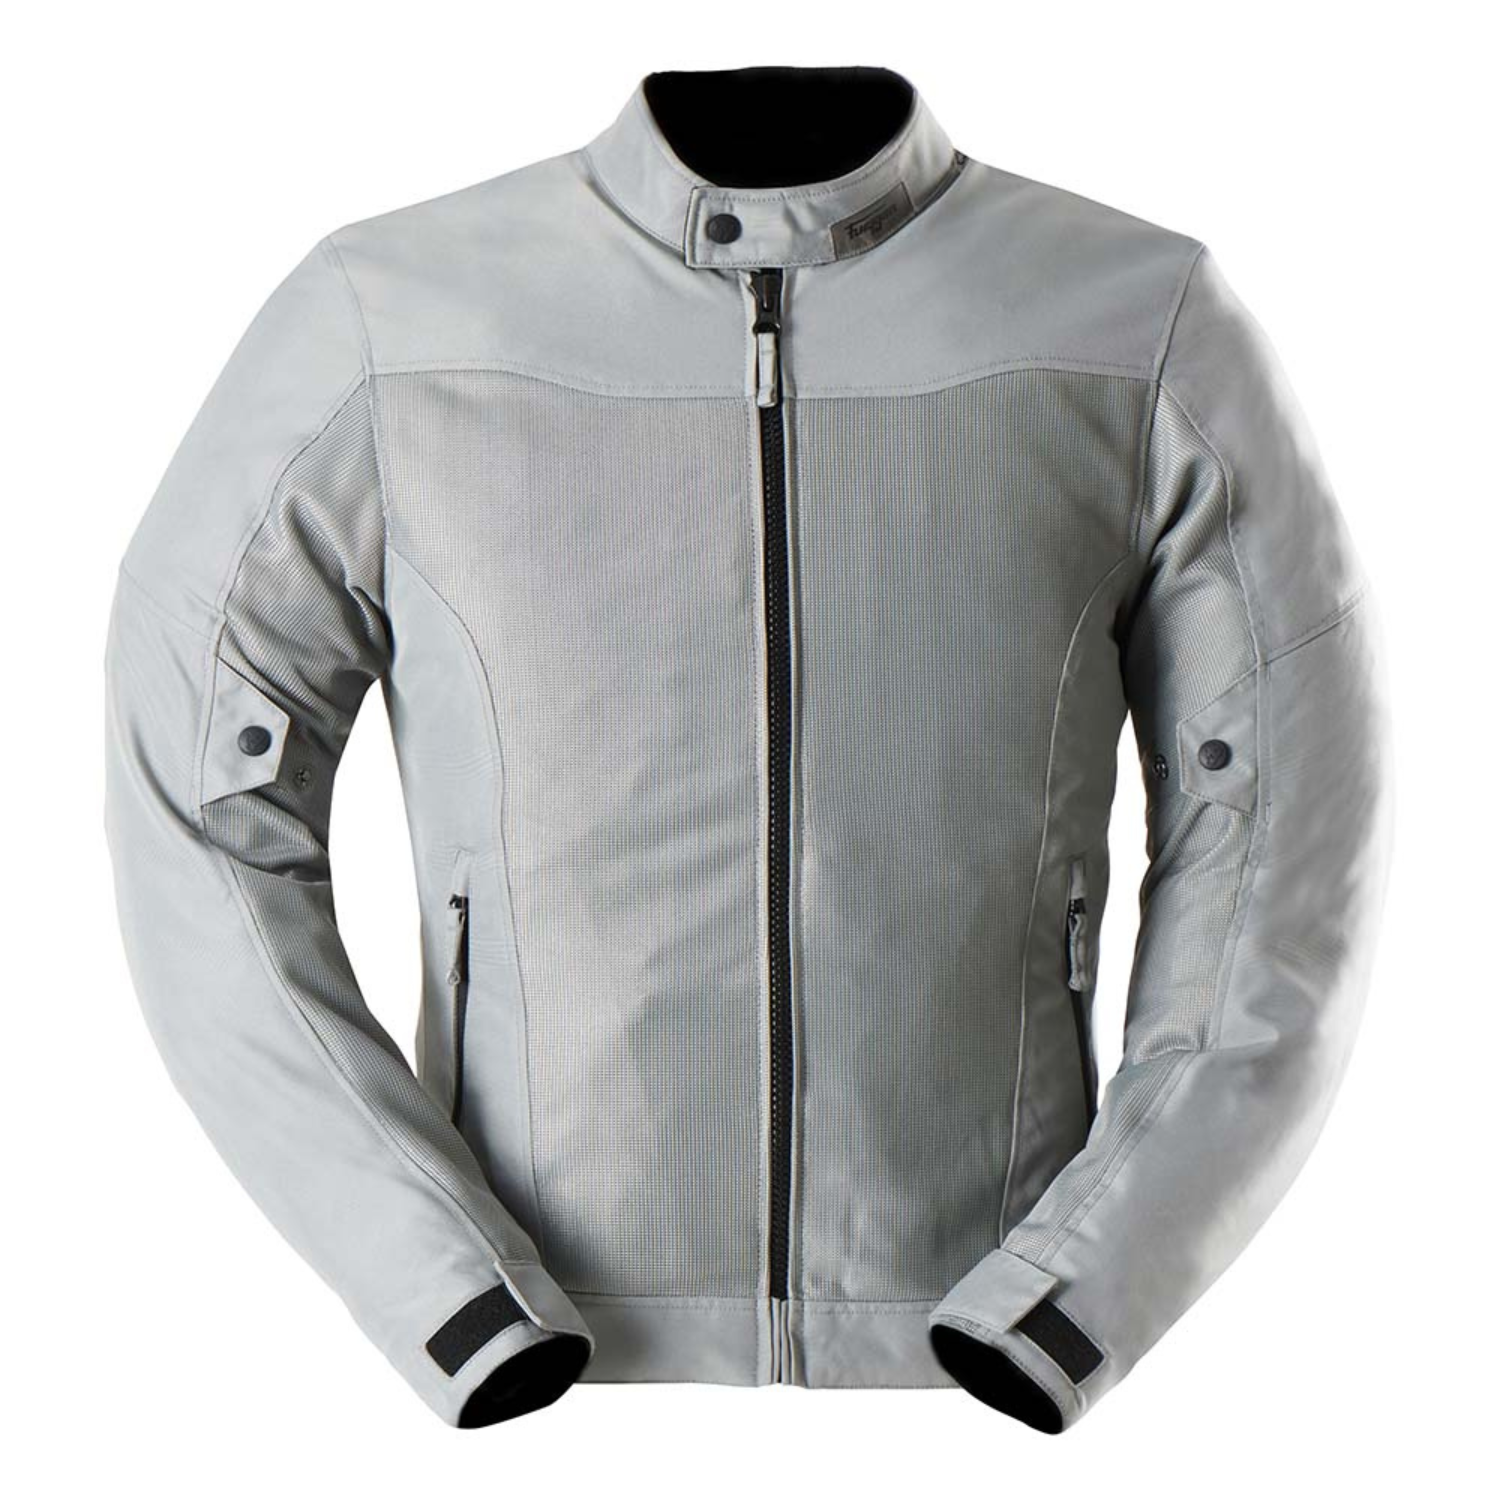 Image of Furygan Mistral Evo 3 Jacket Grey Size L EN